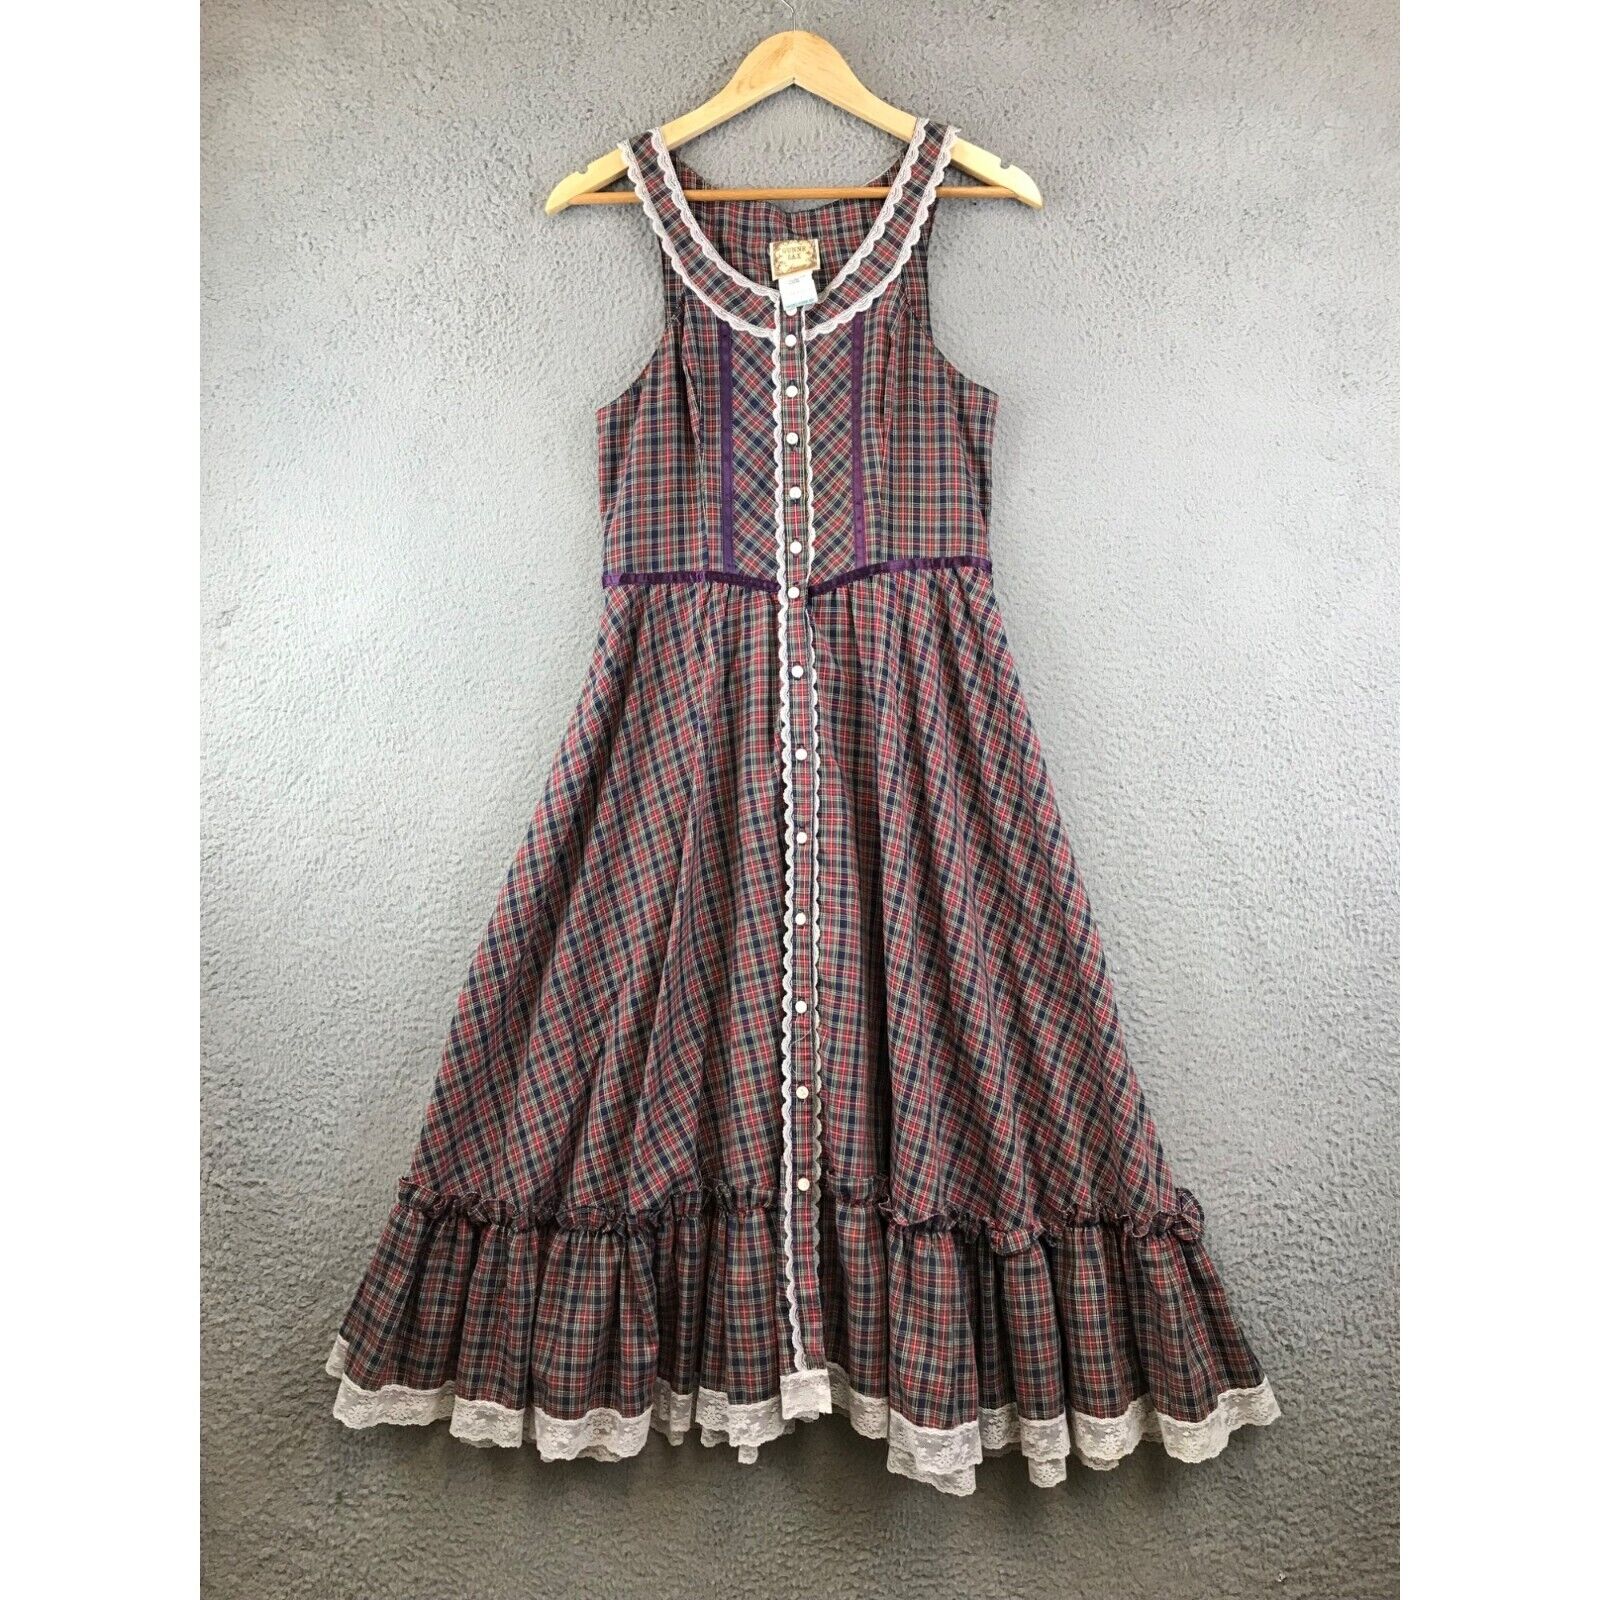 Vintage Gunne Sax by Jessica San Francisco Plaid Dress size 9